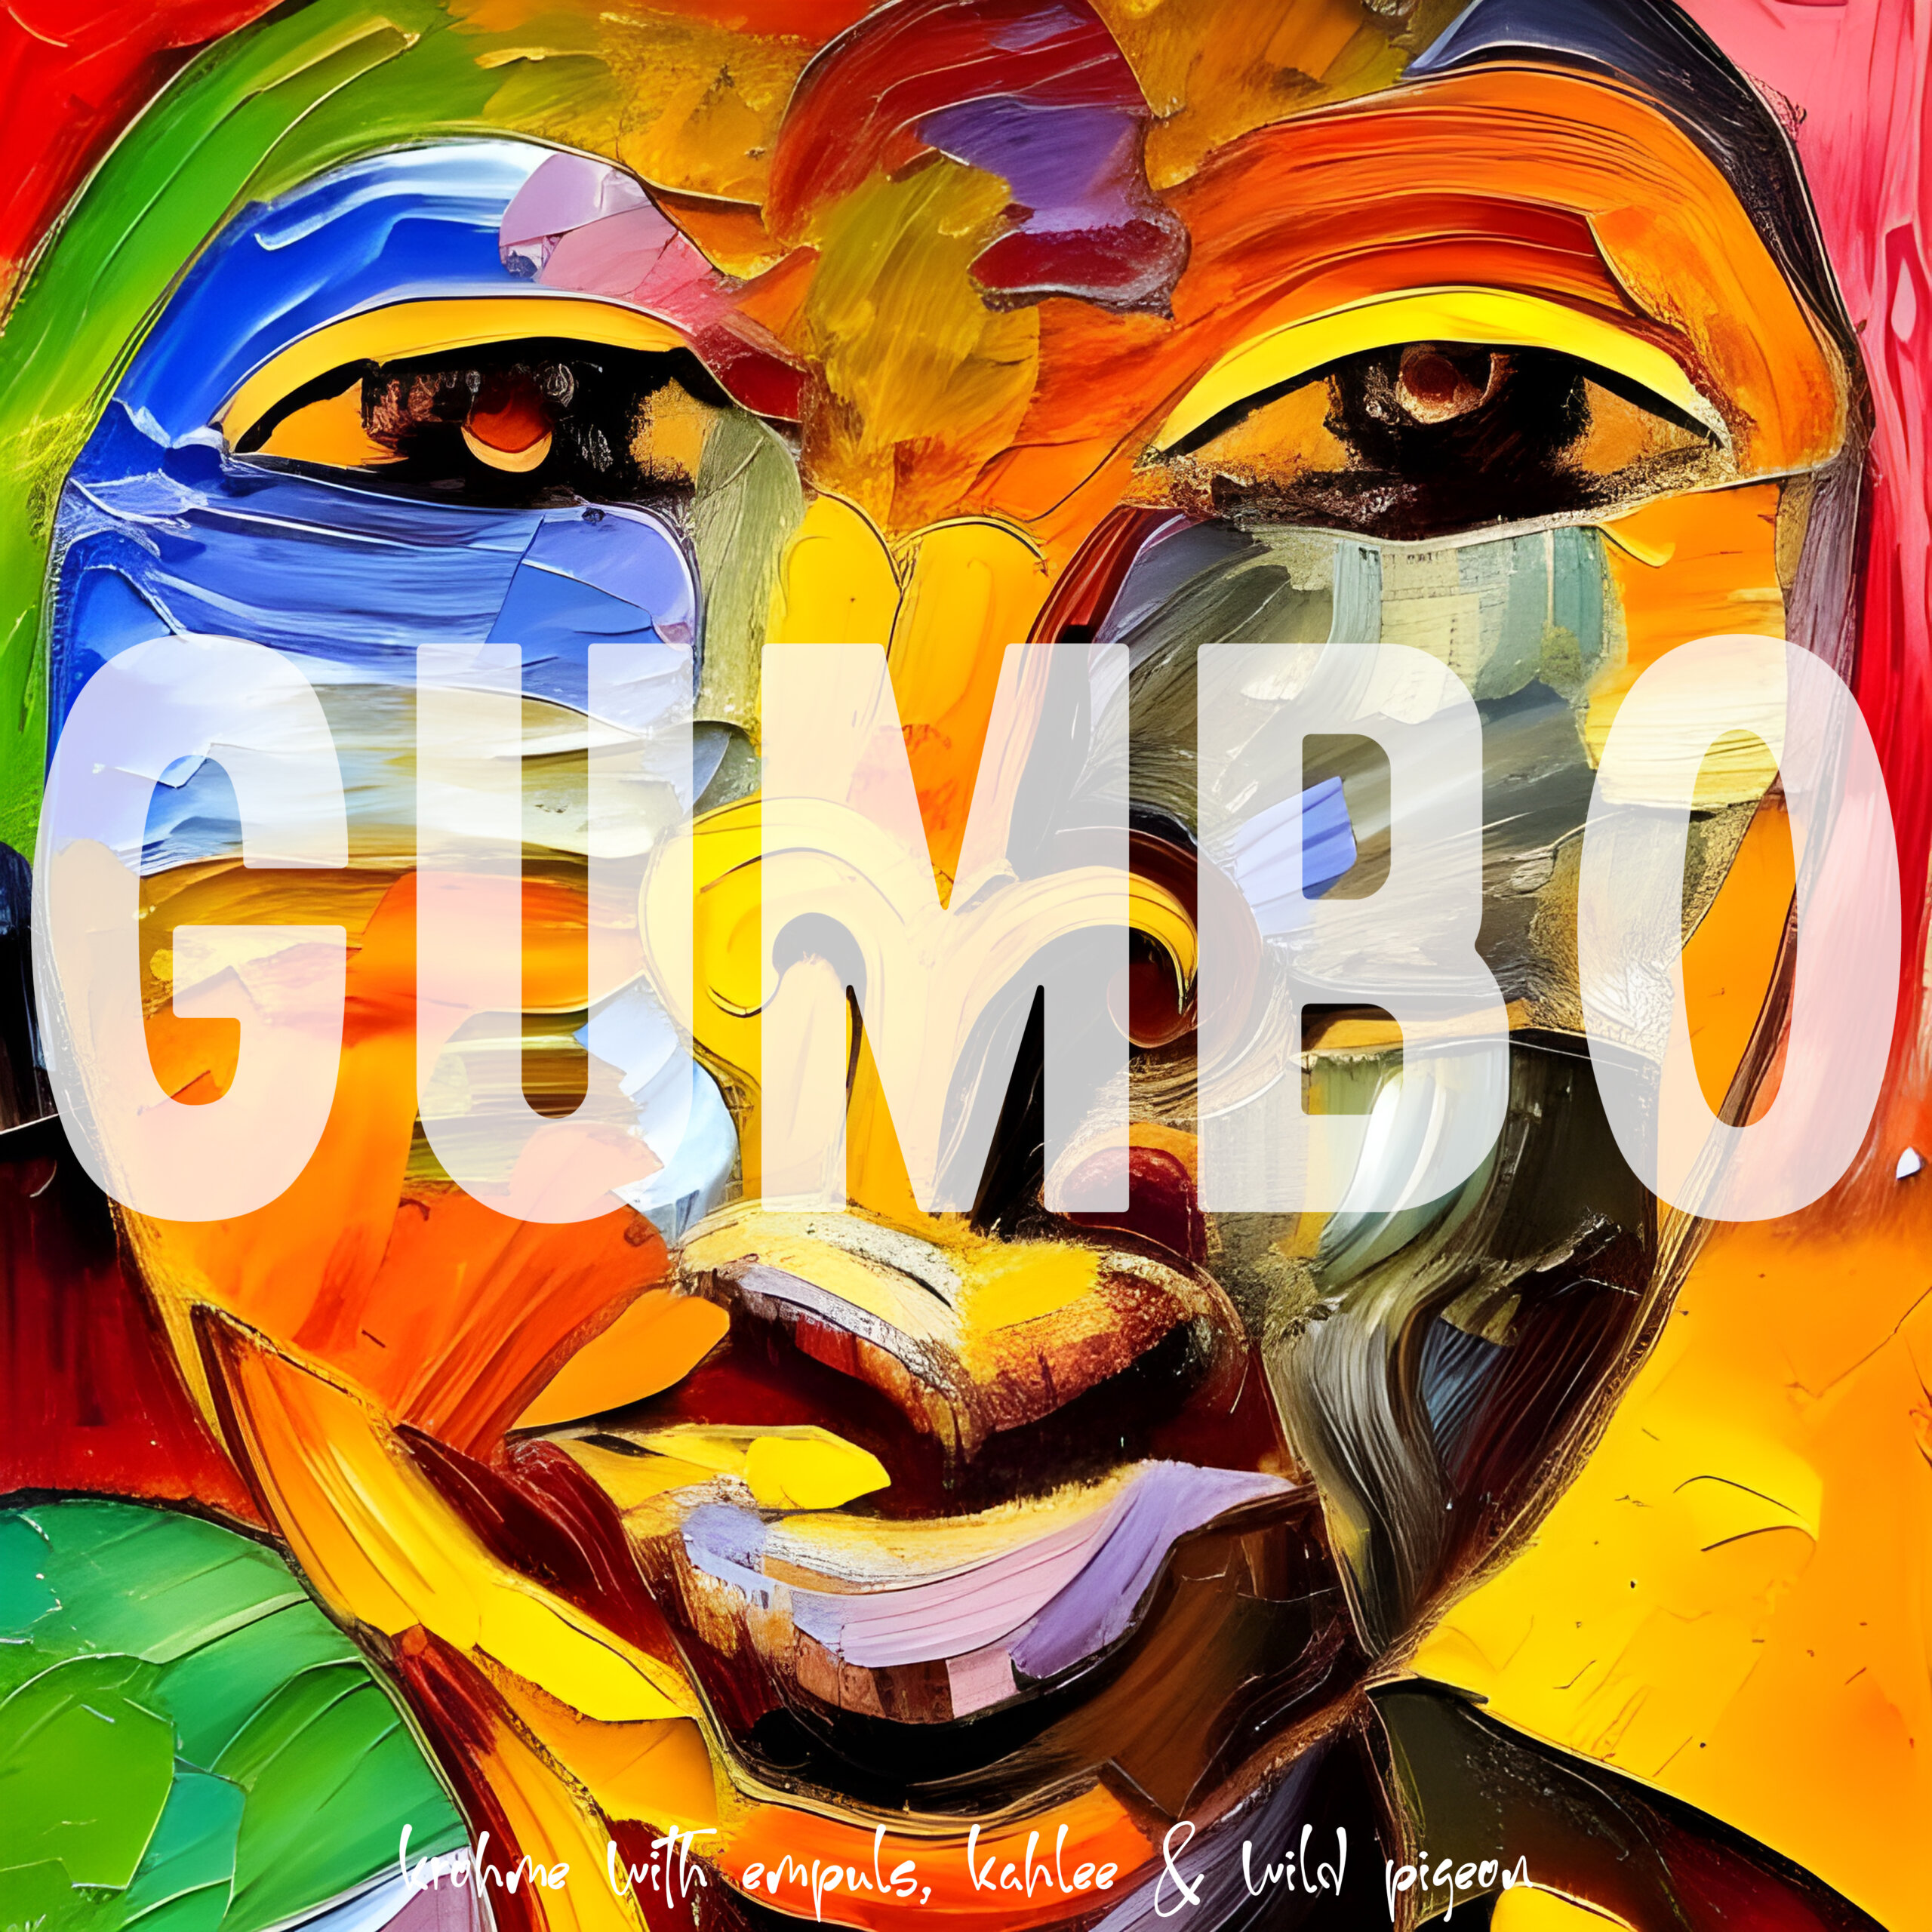 Krohme feat. Empuls, Kahlee, & Wild Pigeon "Gumbo" (Audio)